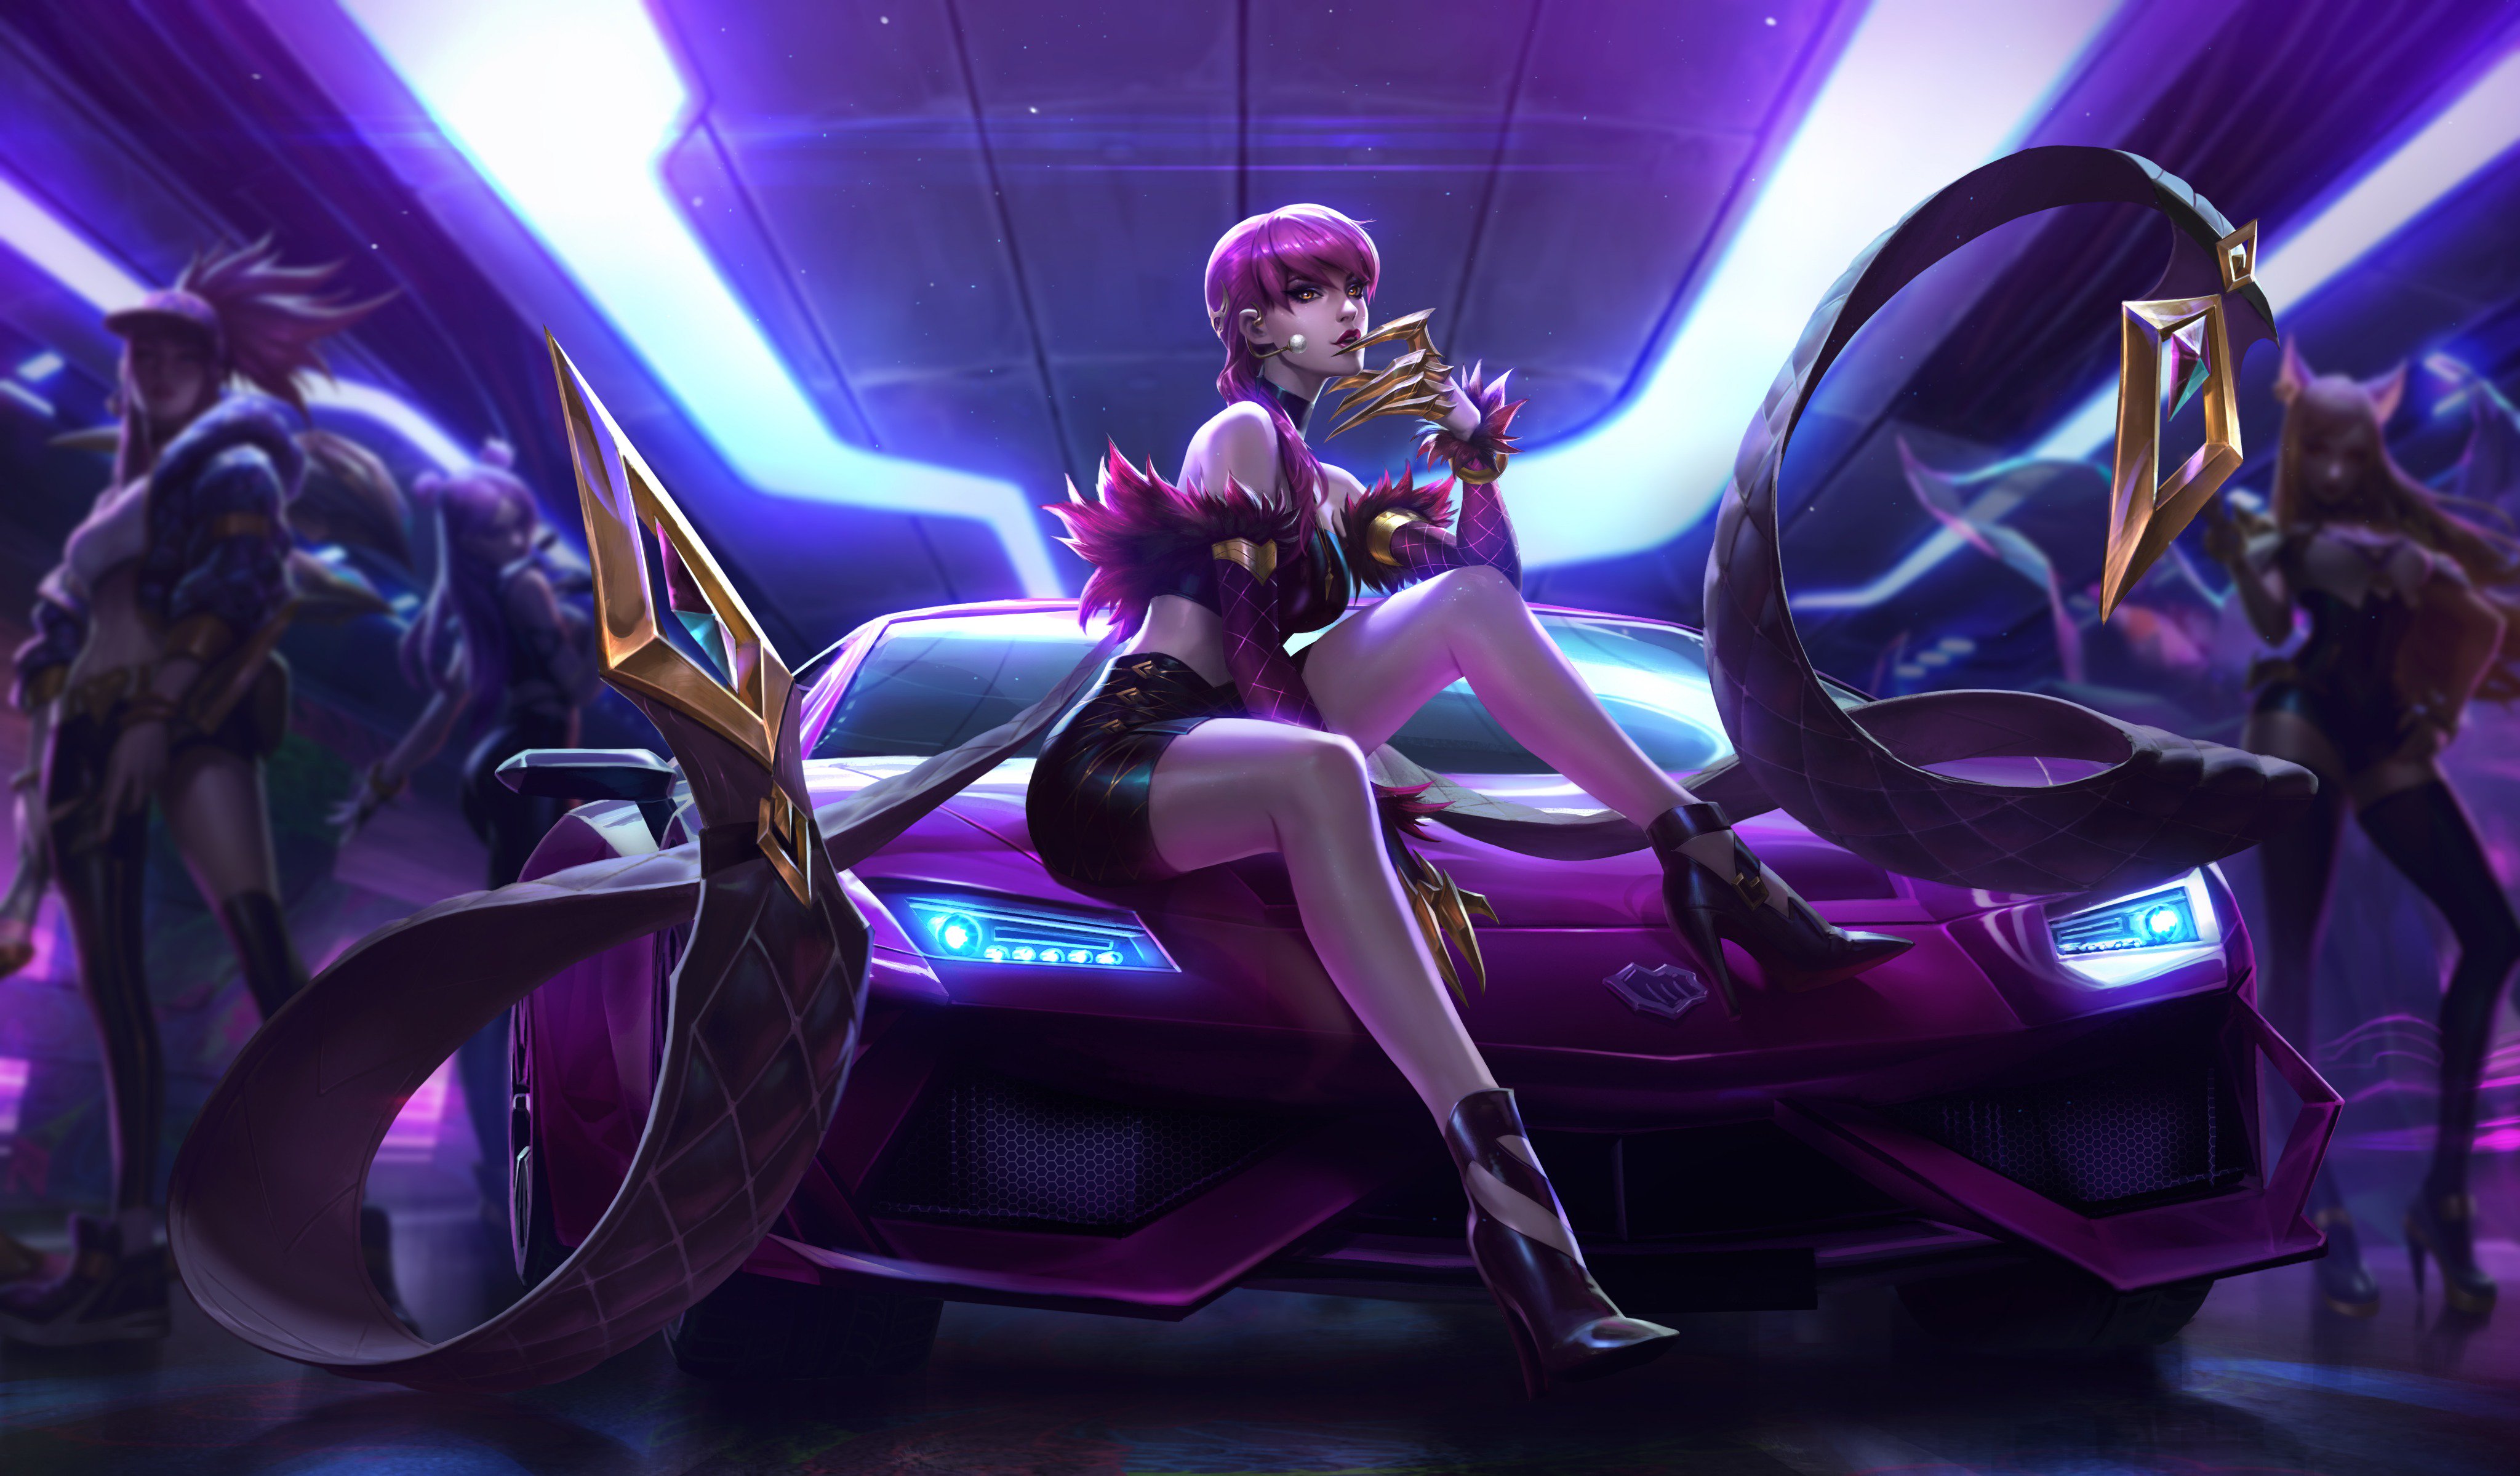 General 4095x2398 League of Legends K/DA video game girls legs purple hair PC gaming artwork women with cars car vehicle video game art